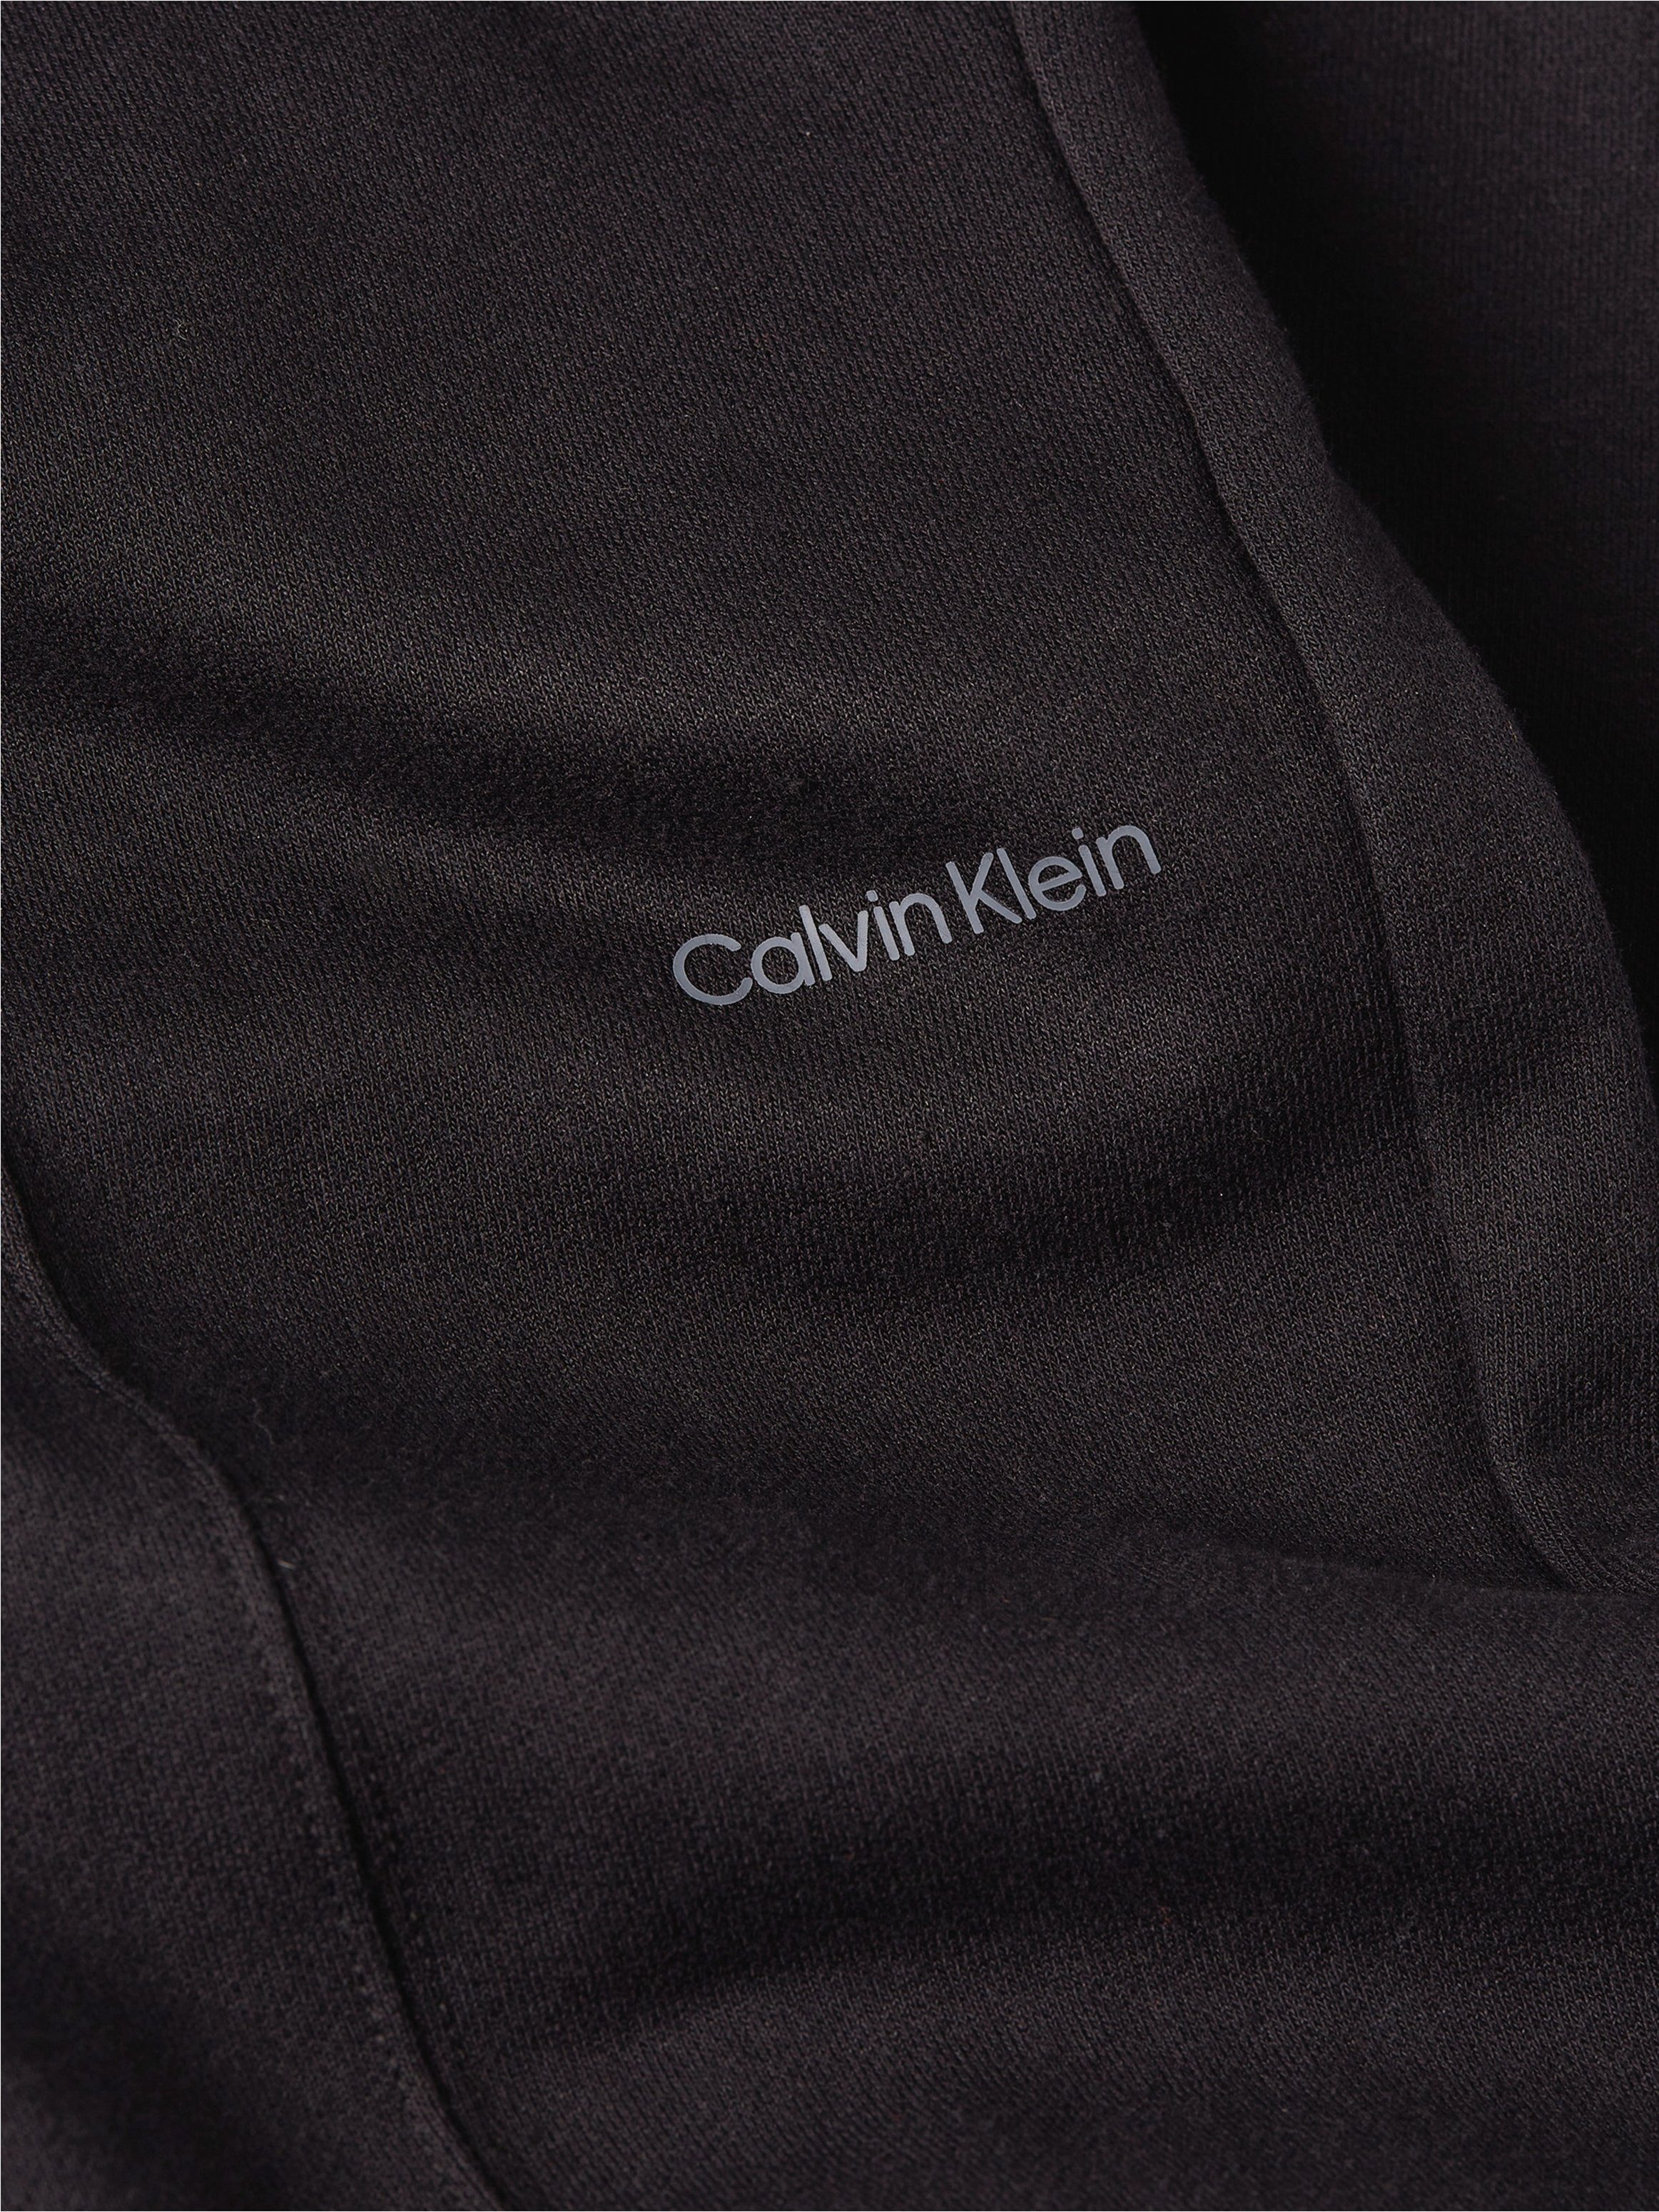 Calvin Klein Sport Sweatpants